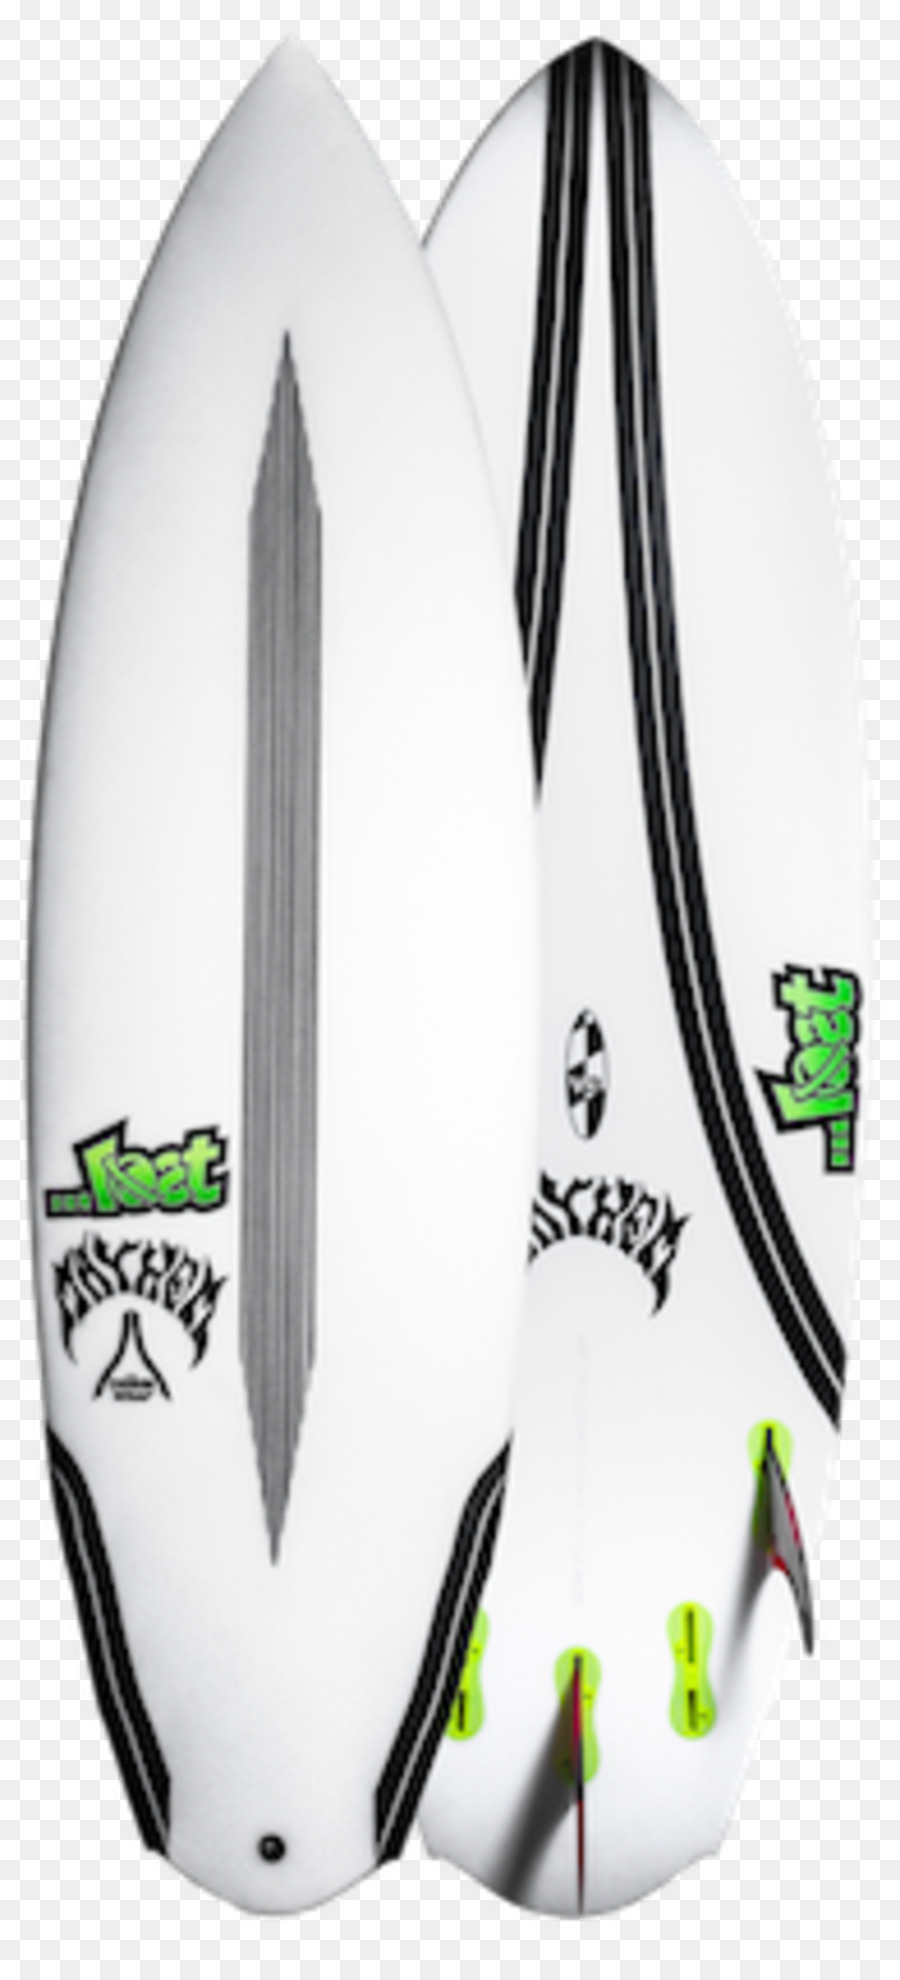 Surfboard-shaper Surfen Epoxid-Rakete - Surfbrett